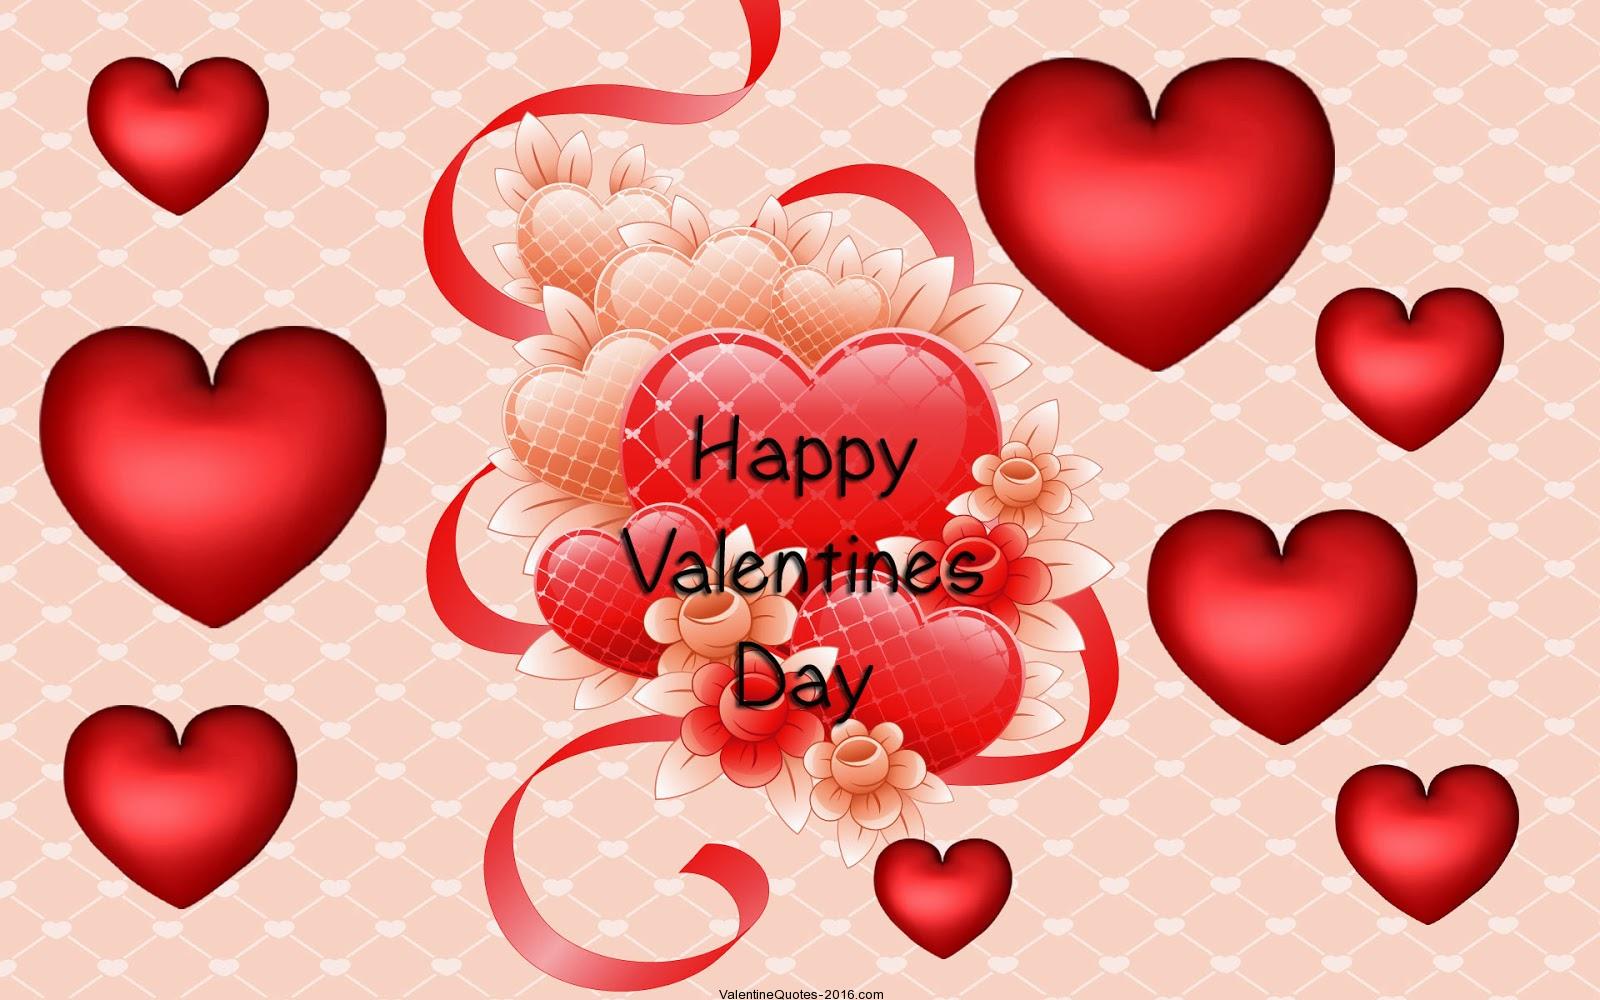 Happy Valentines Day Image Pics Photos Wallpaper